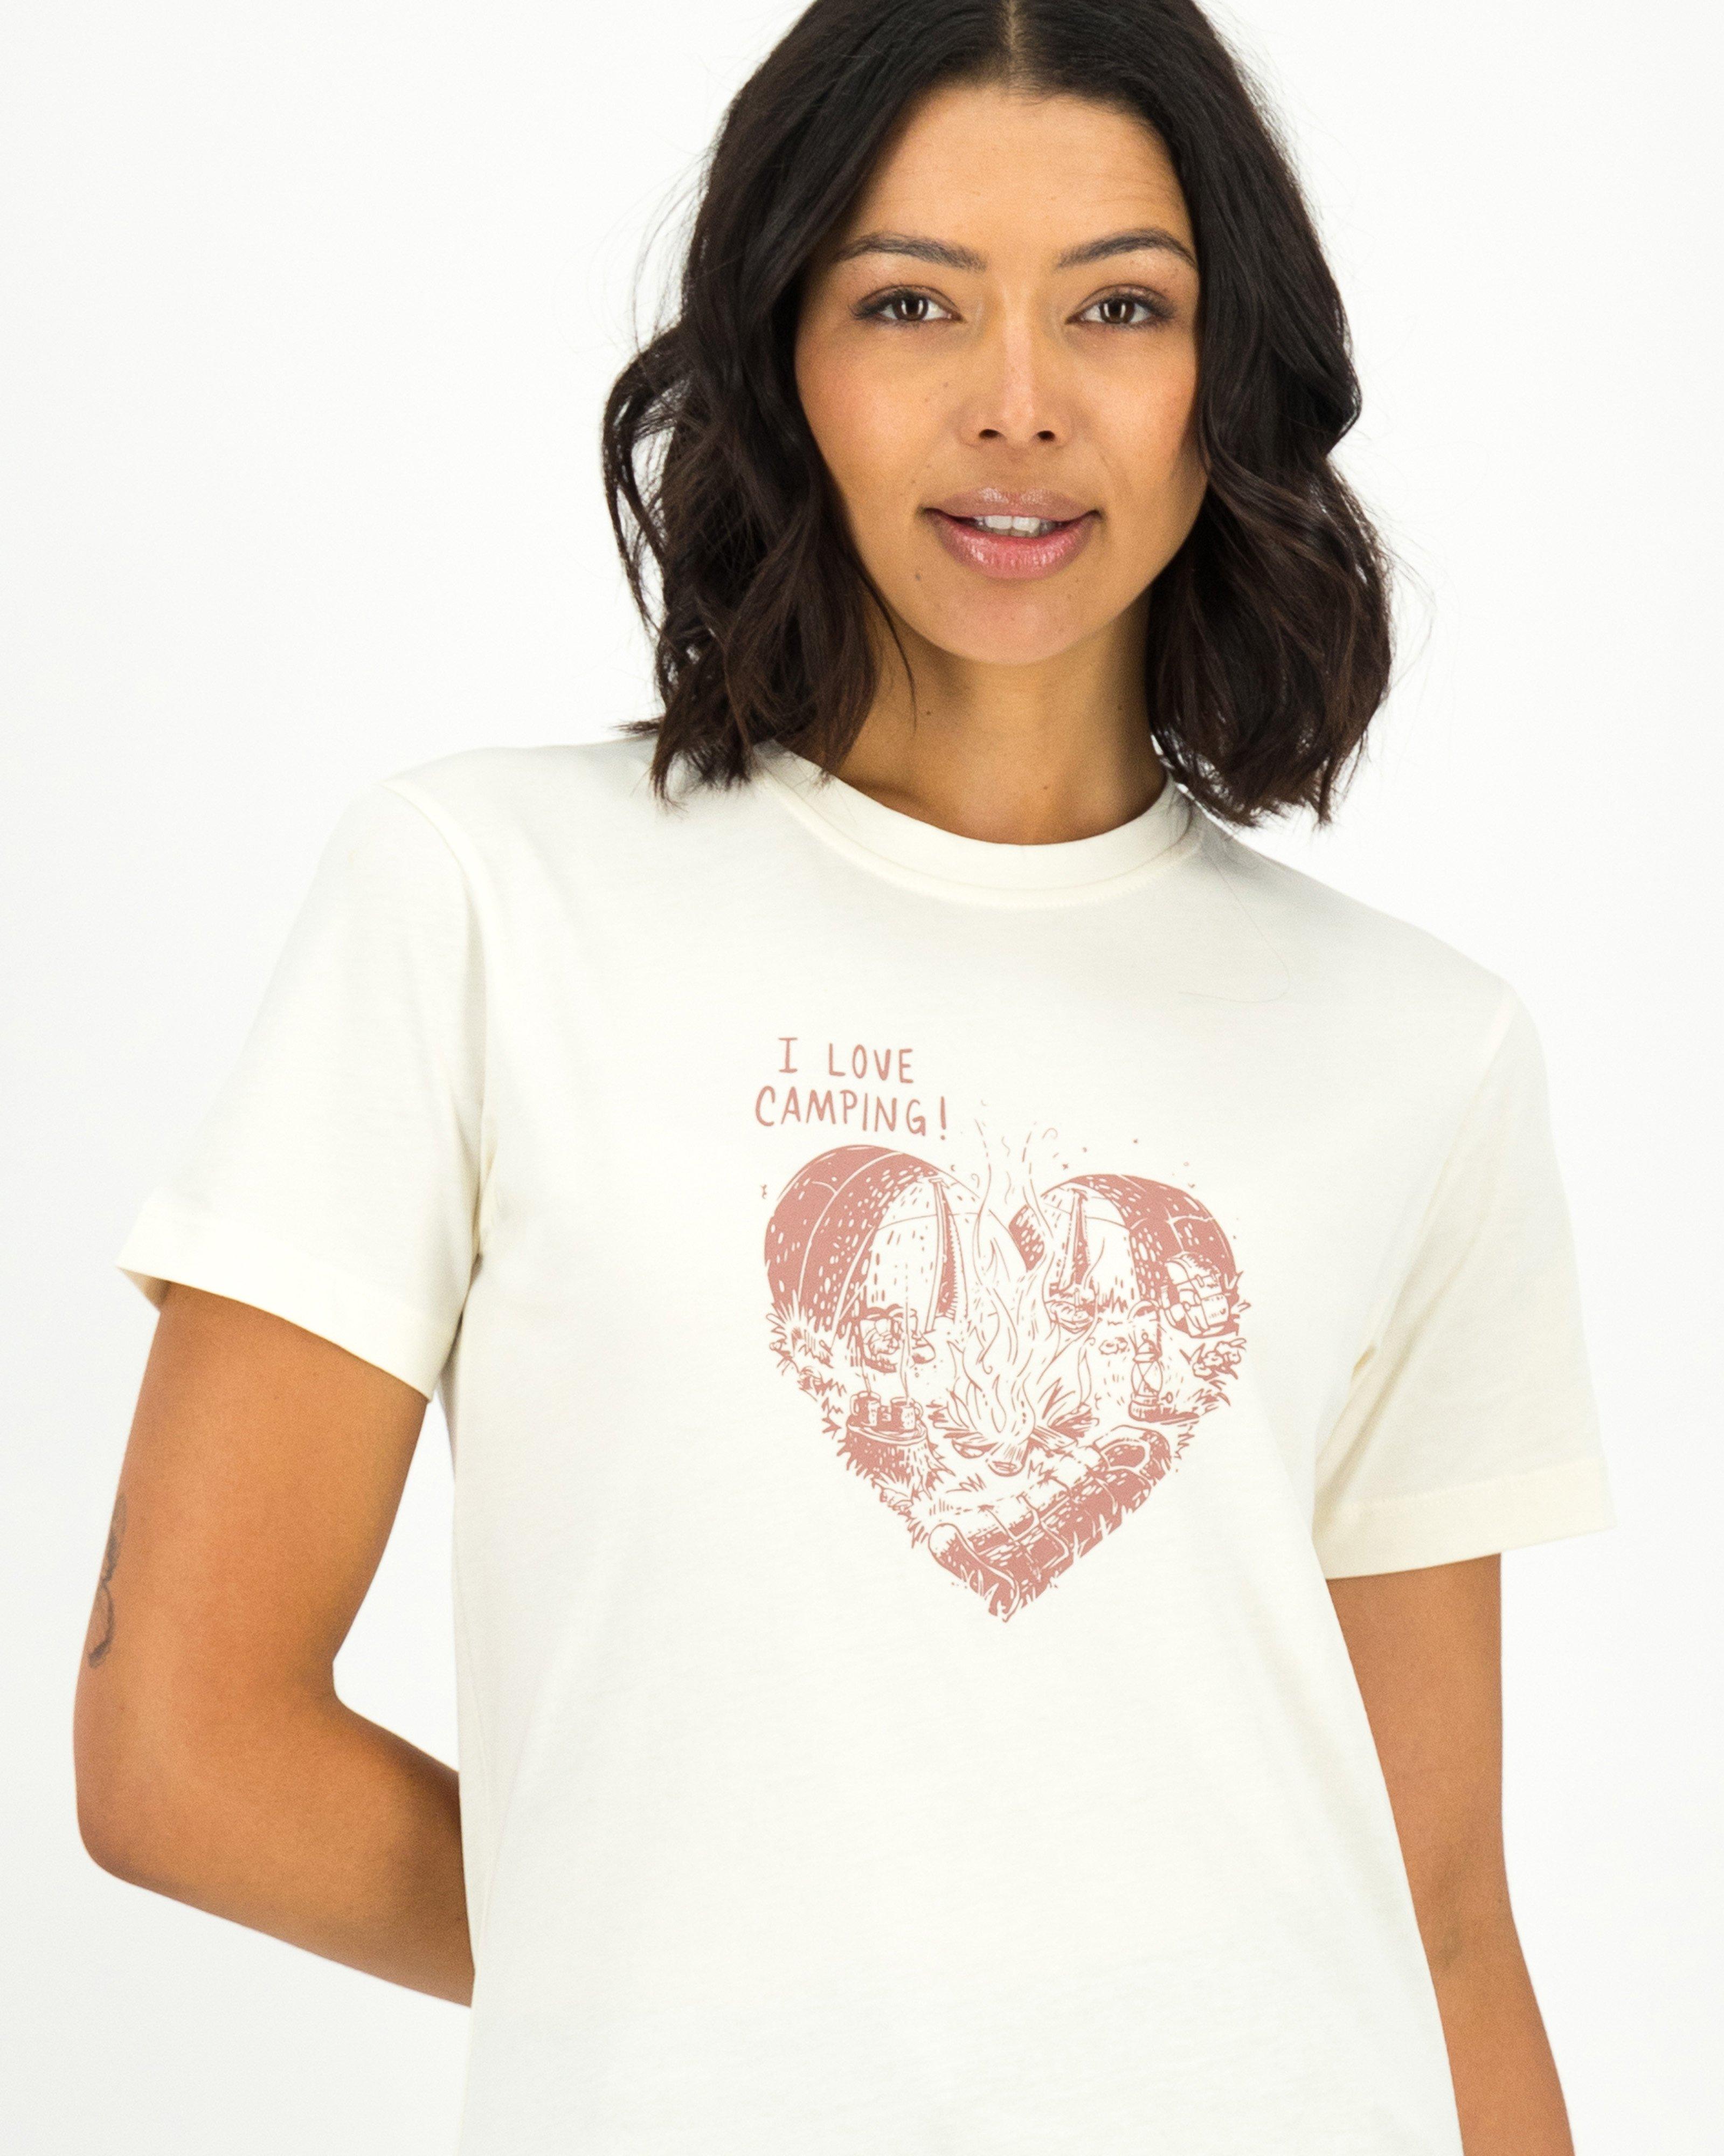 Jack Wolfskin Women’s Camping Love Slim Fit Cotton T-shirt -  White